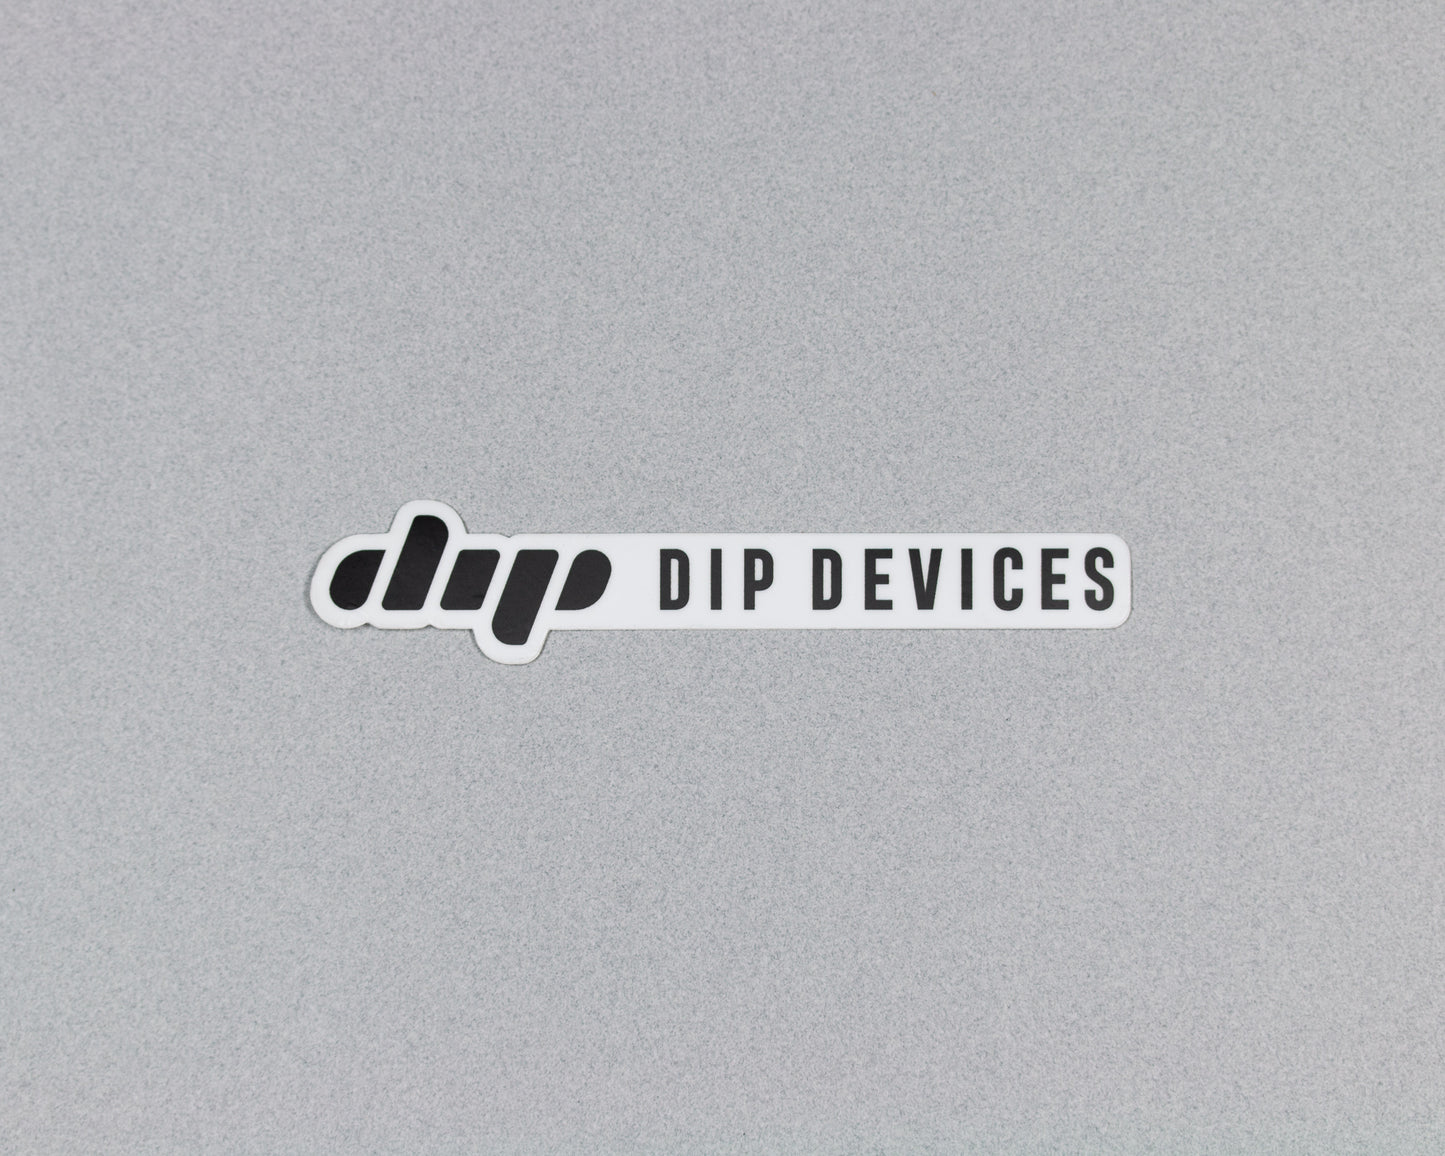 Dip Devices logo sticker black